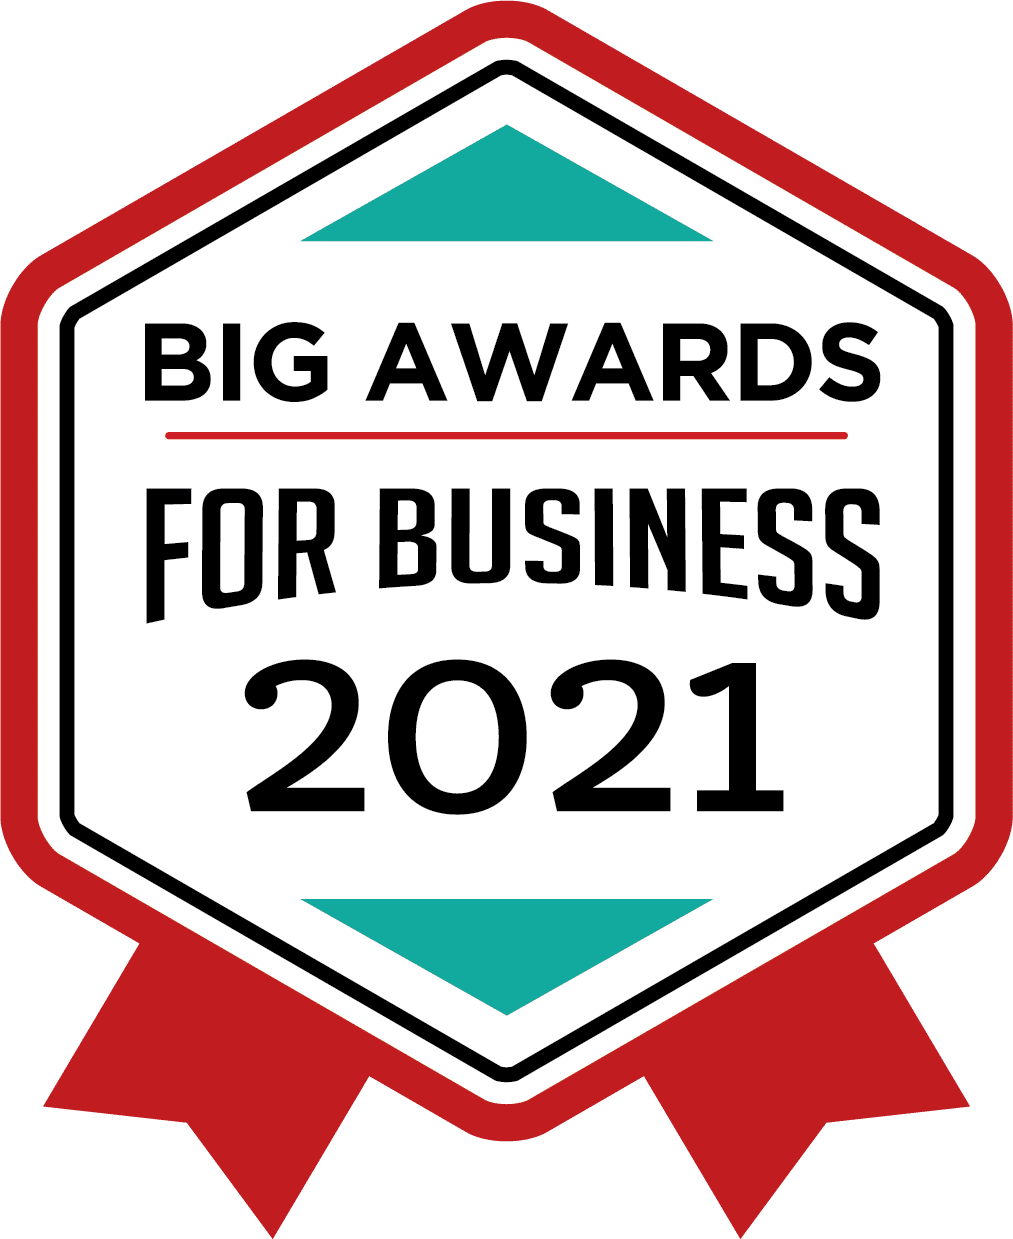 BIG Awards for Business